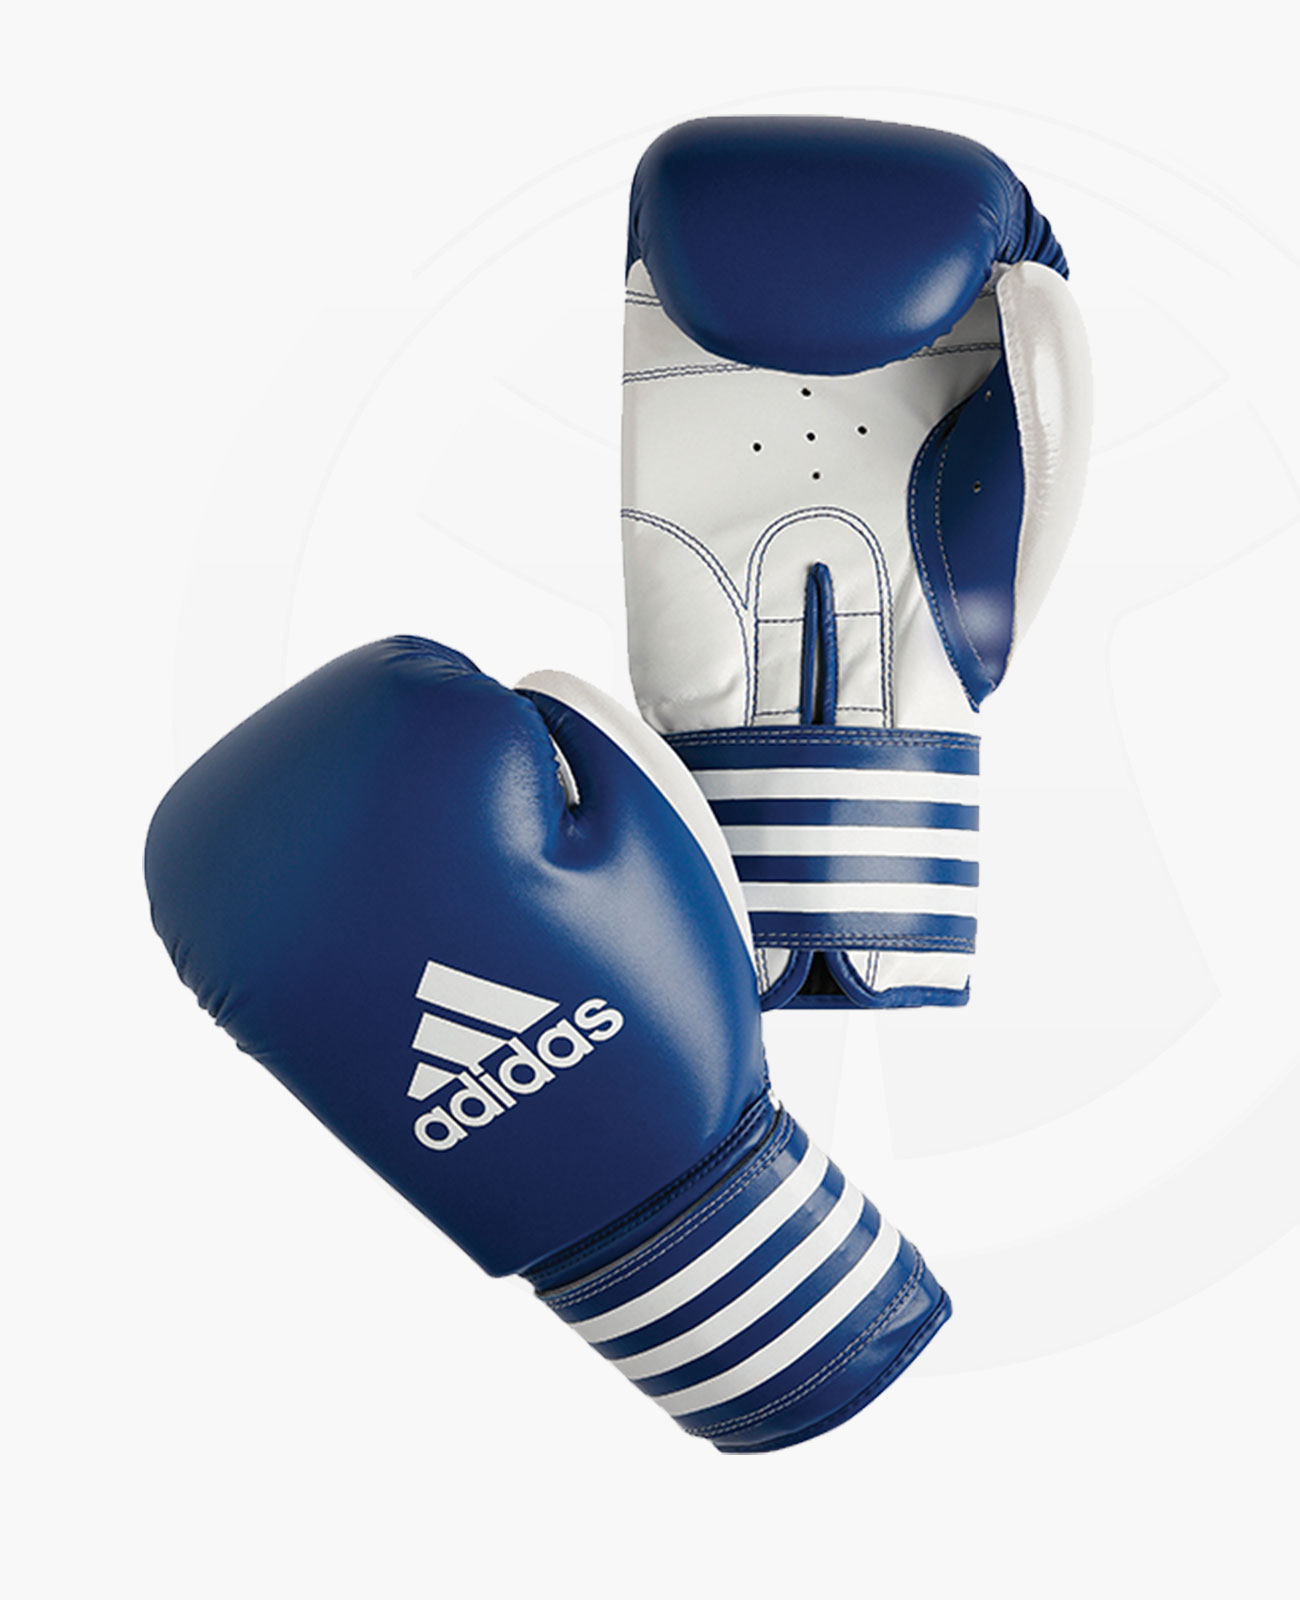 Адидас бокс. Боксерские перчатки adidas. Боксерские перчатки адидас АИБА. Перчатки боксёрские адидас 251. Перчатки боксерские адидас профессиональные.